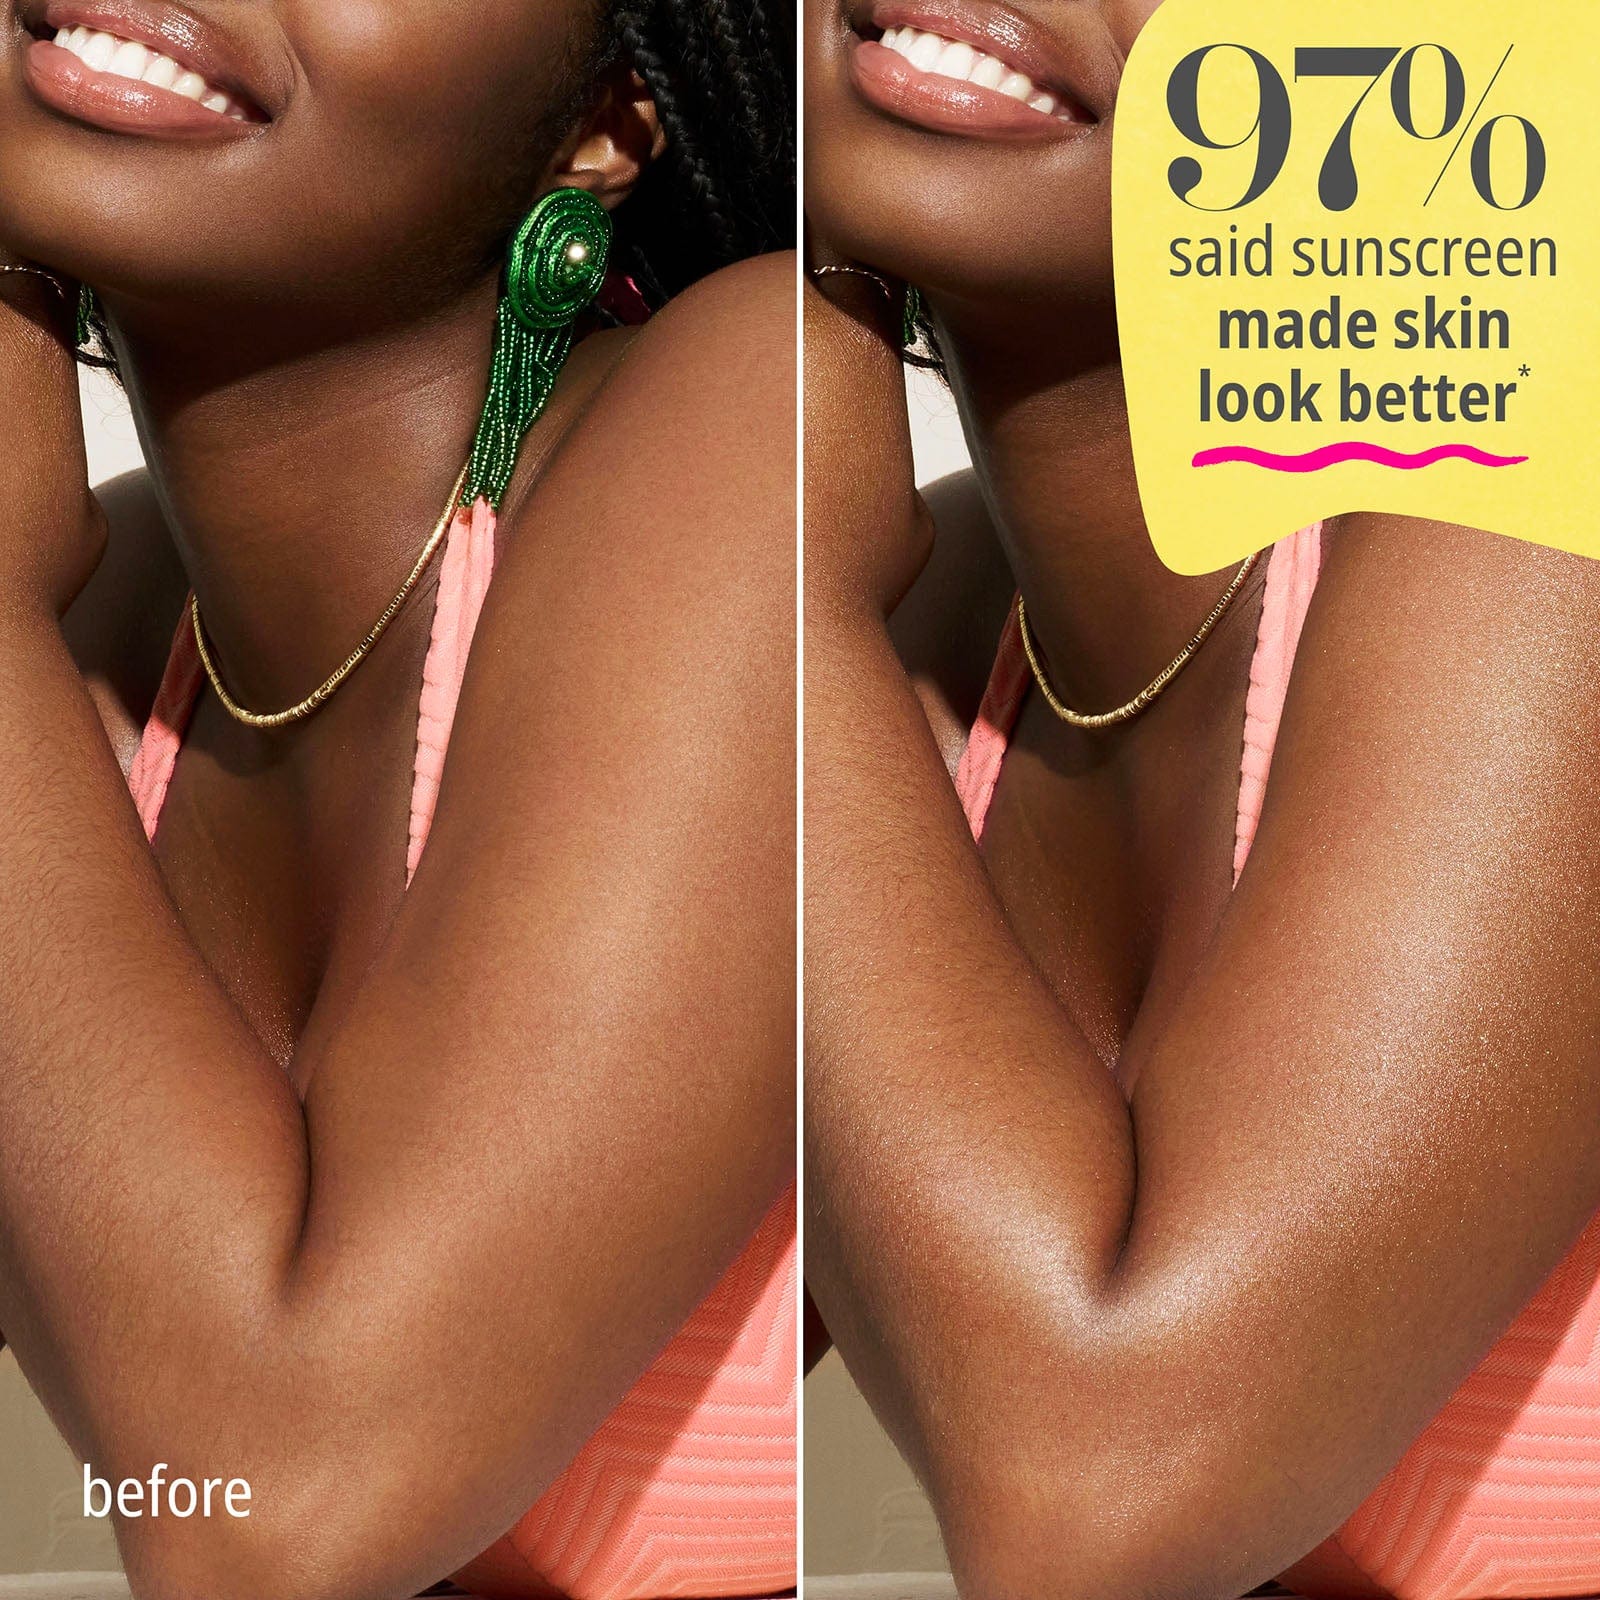 97% said sunscreen made skin look better*